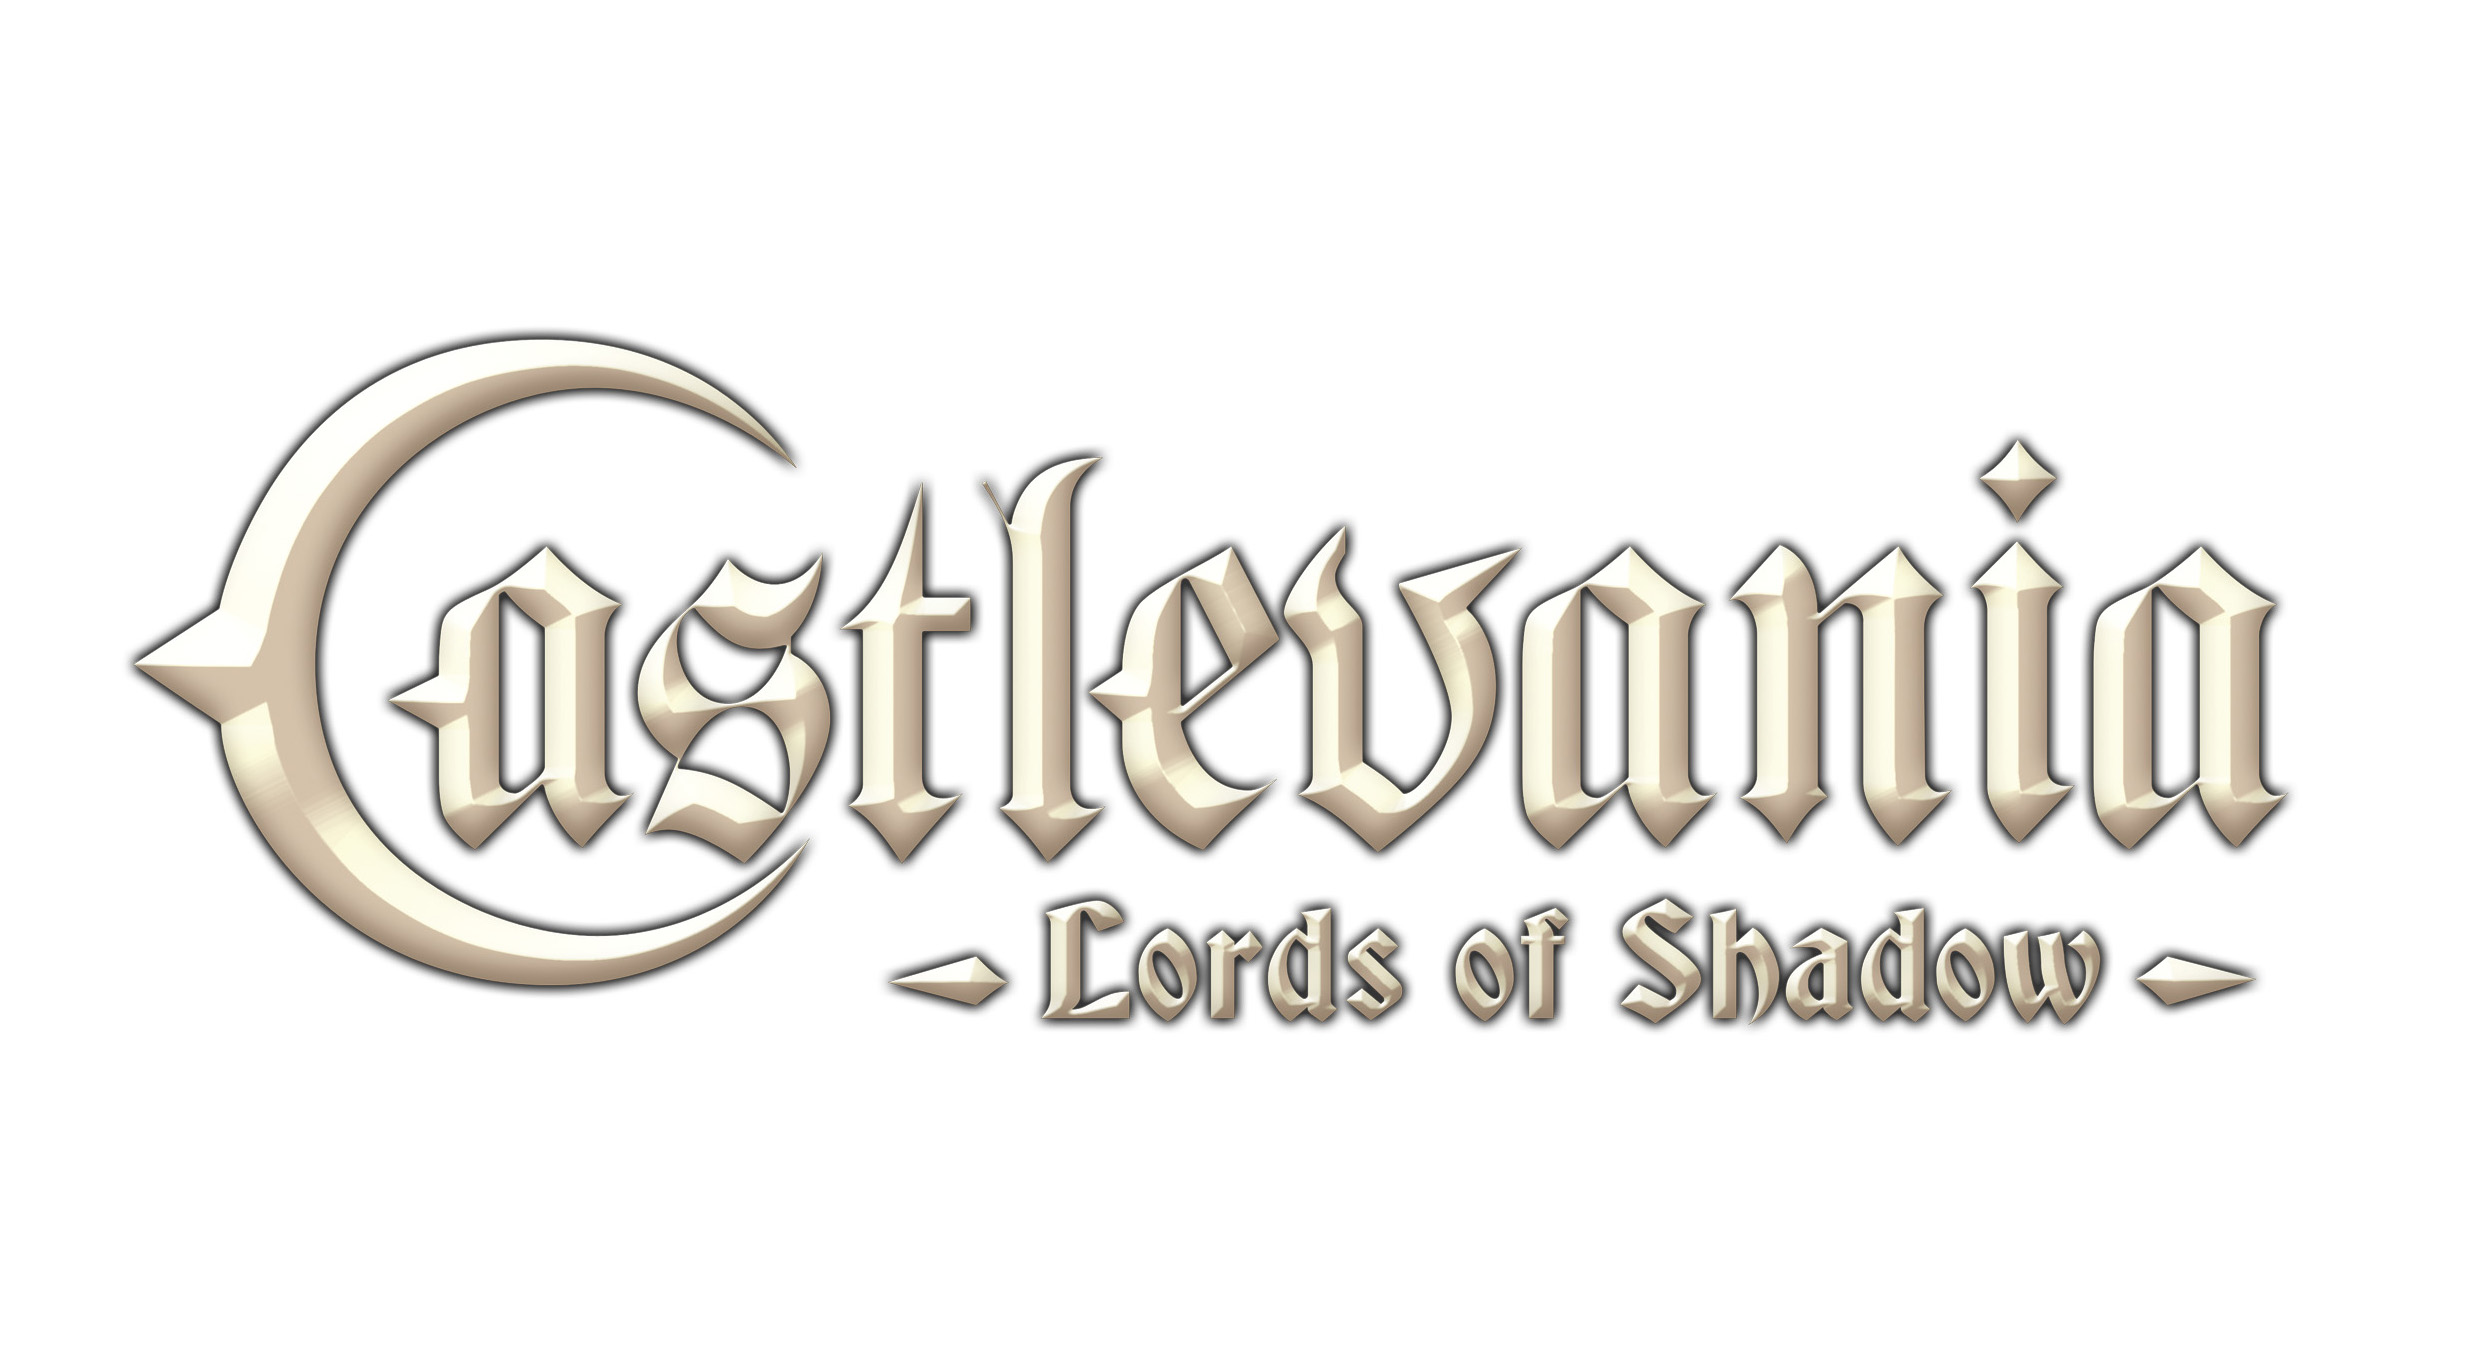 Steam castlevania lord of shadows фото 23